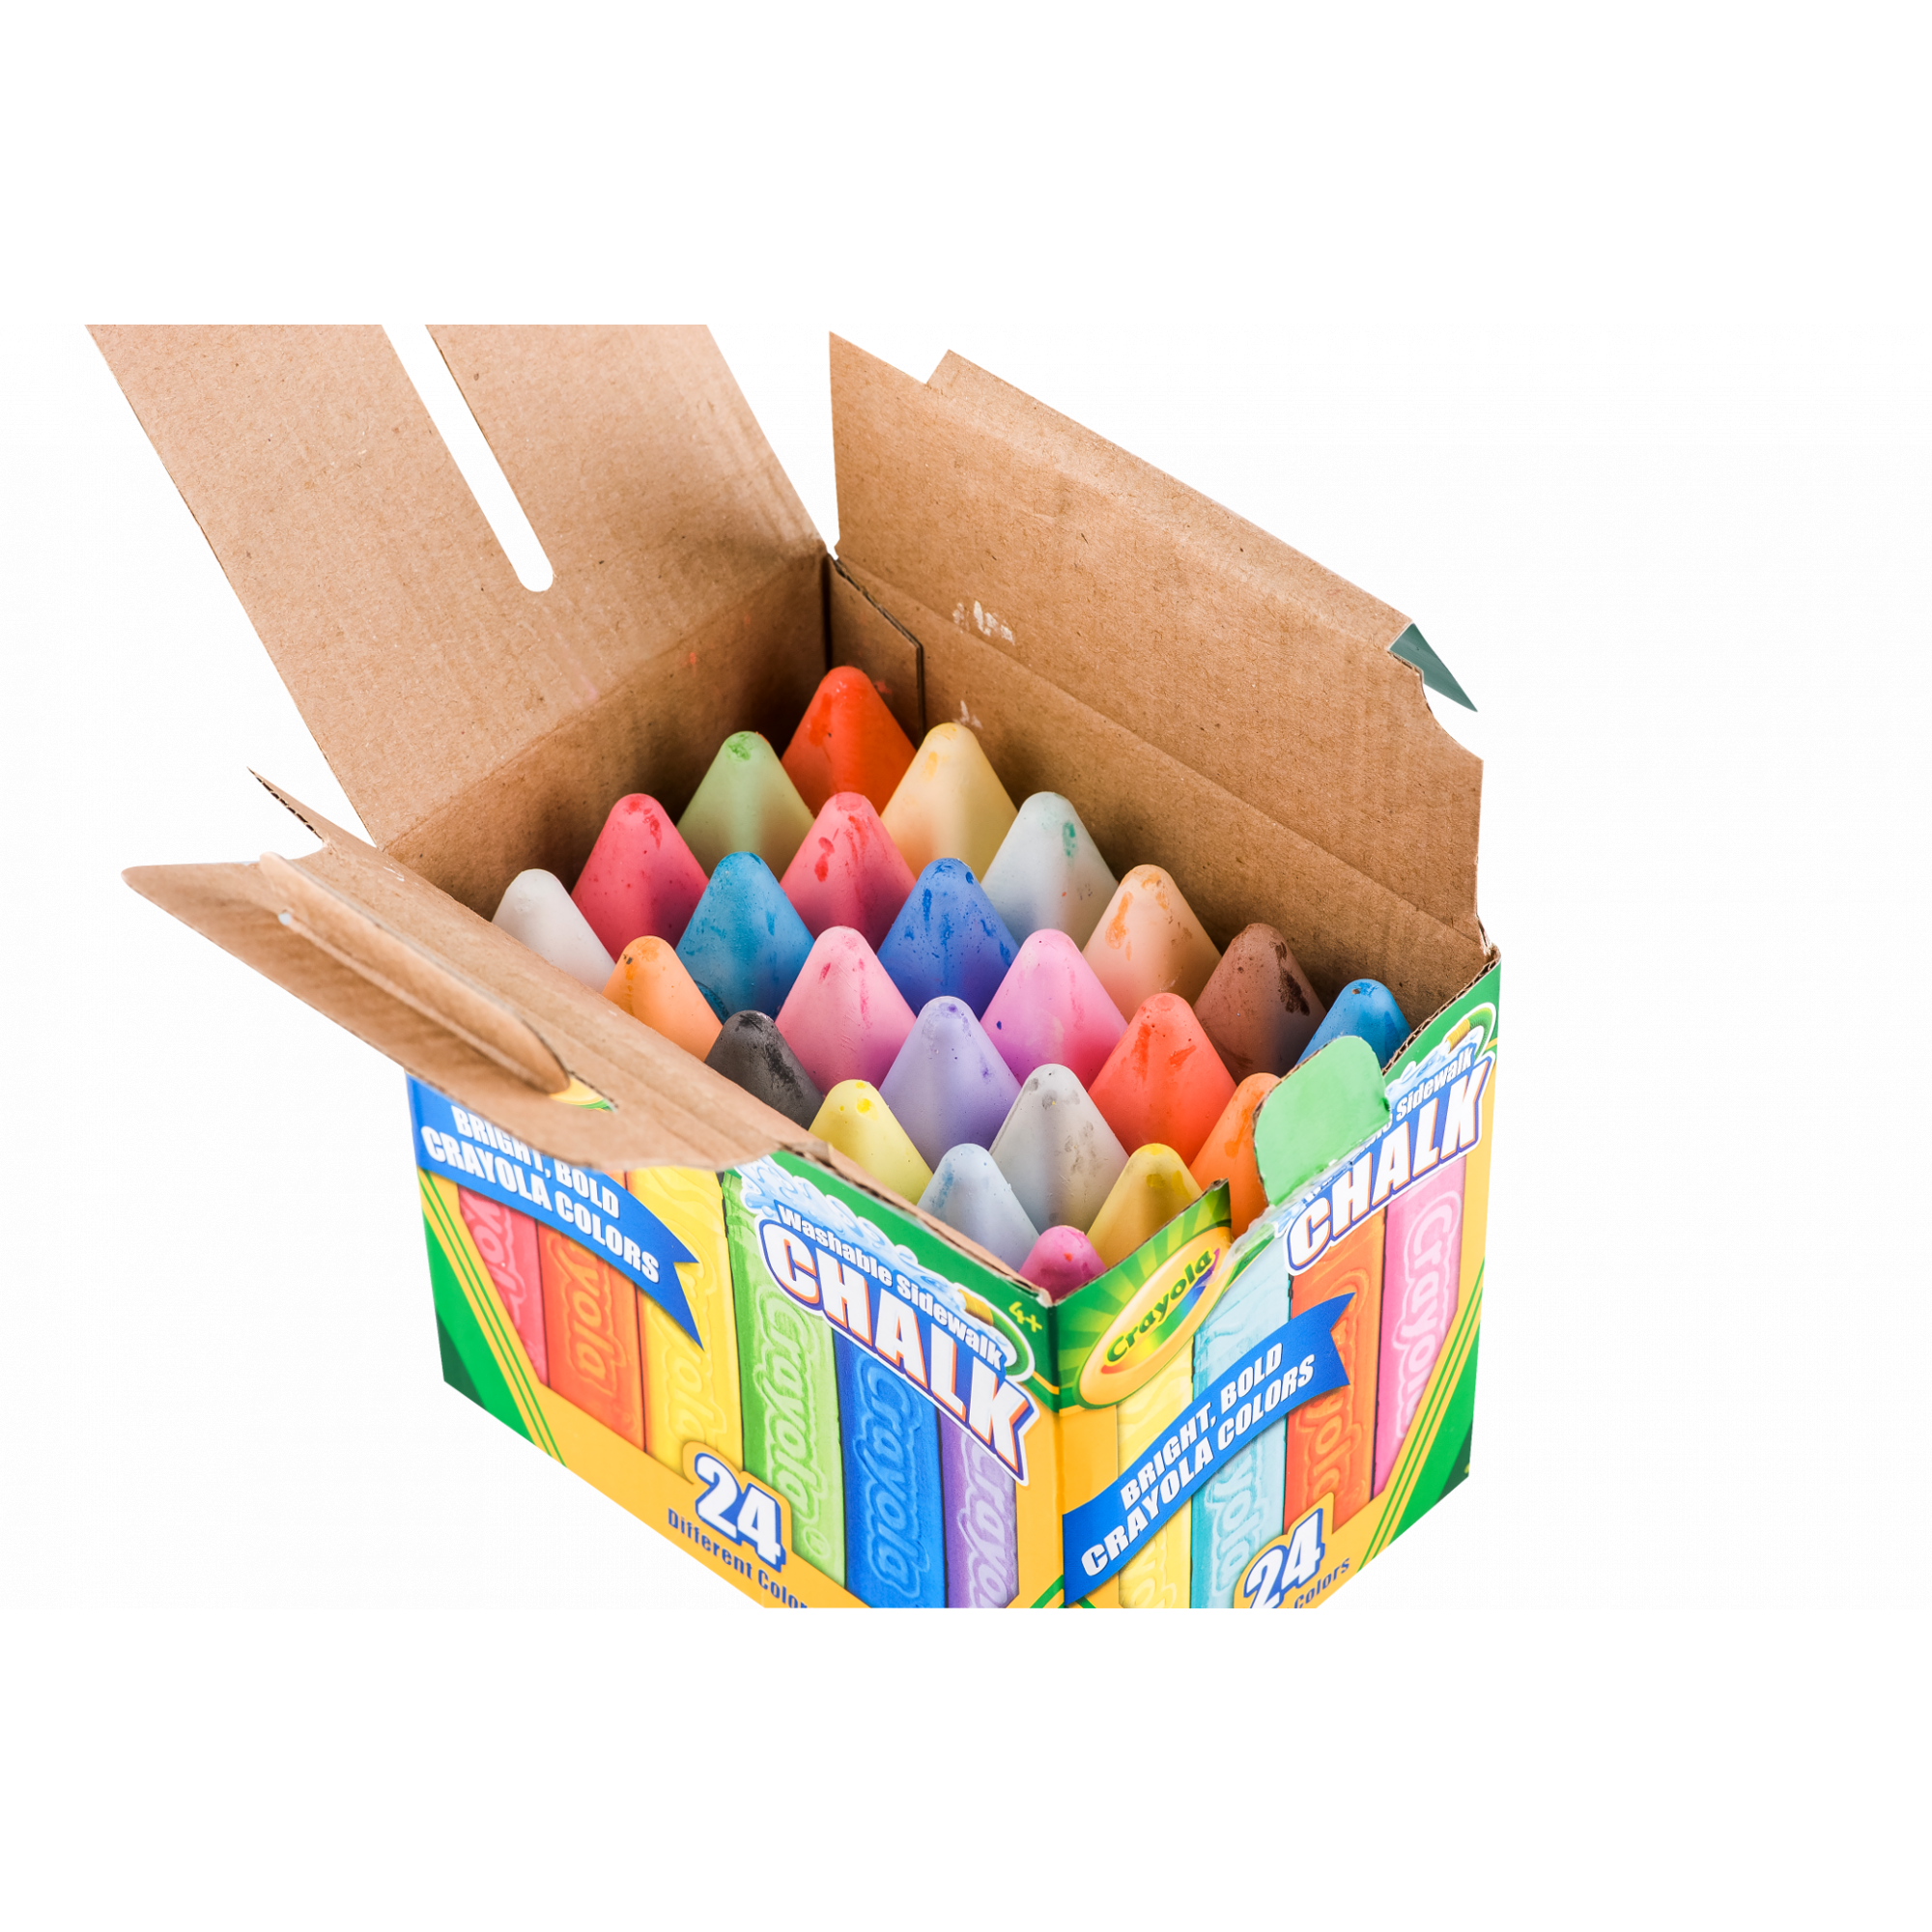 Crayola Drawing Chalk, Craft Supplies, 24 Count